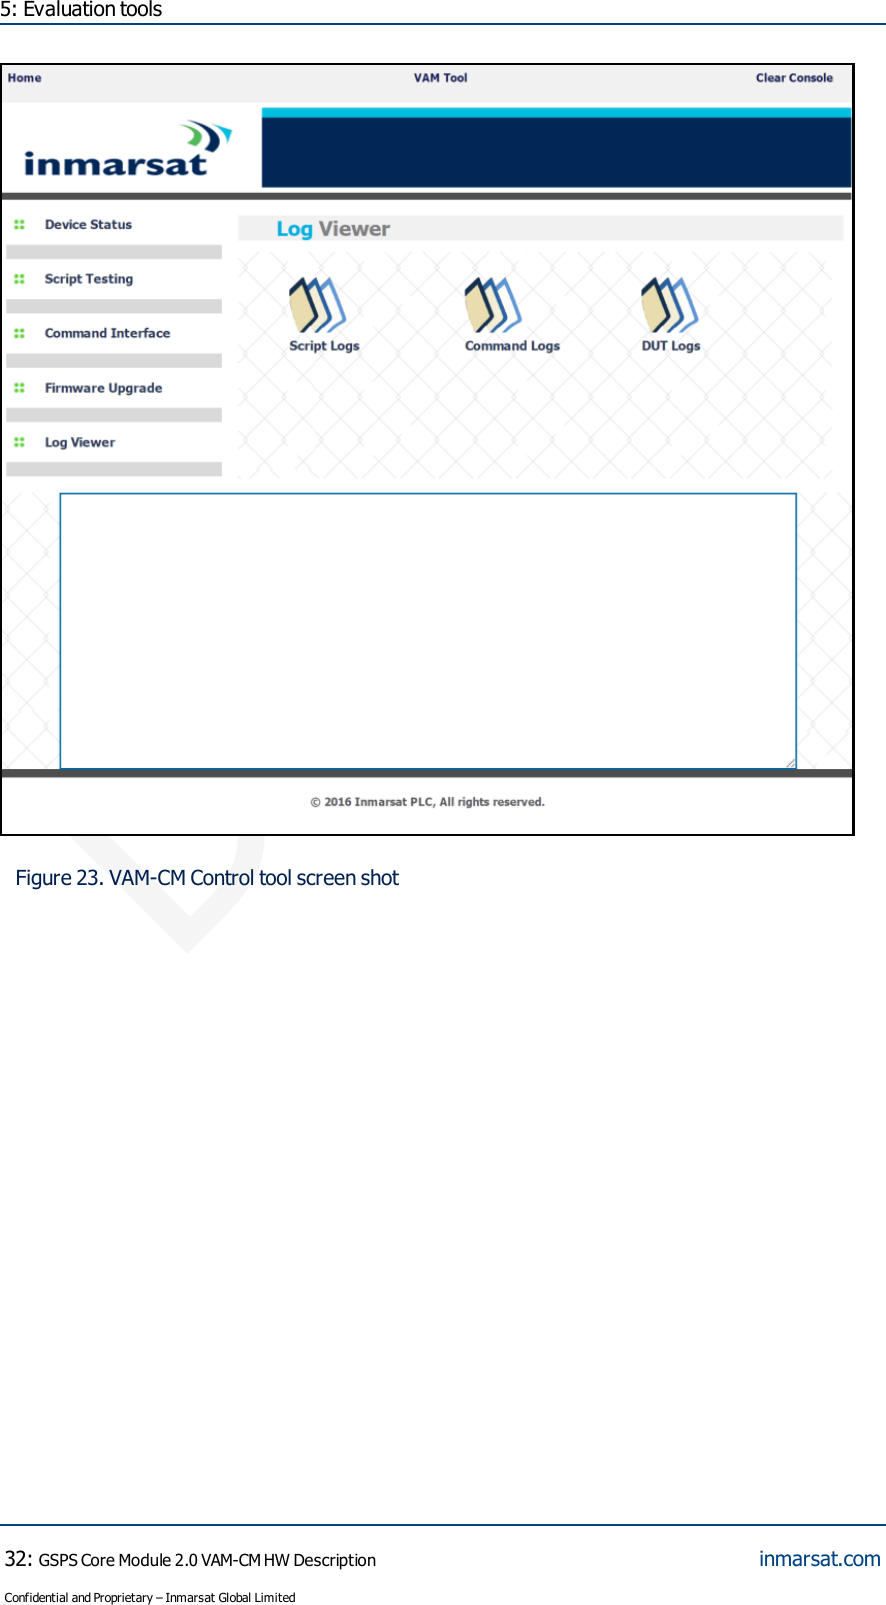 DRAFT5: Evaluation toolsFigure 23. VAM-CM Control tool screen shot32:GSPS Core Module 2.0 VAM-CM HW DescriptionConfidential and Proprietary – Inmarsat Global Limitedinmarsat.com